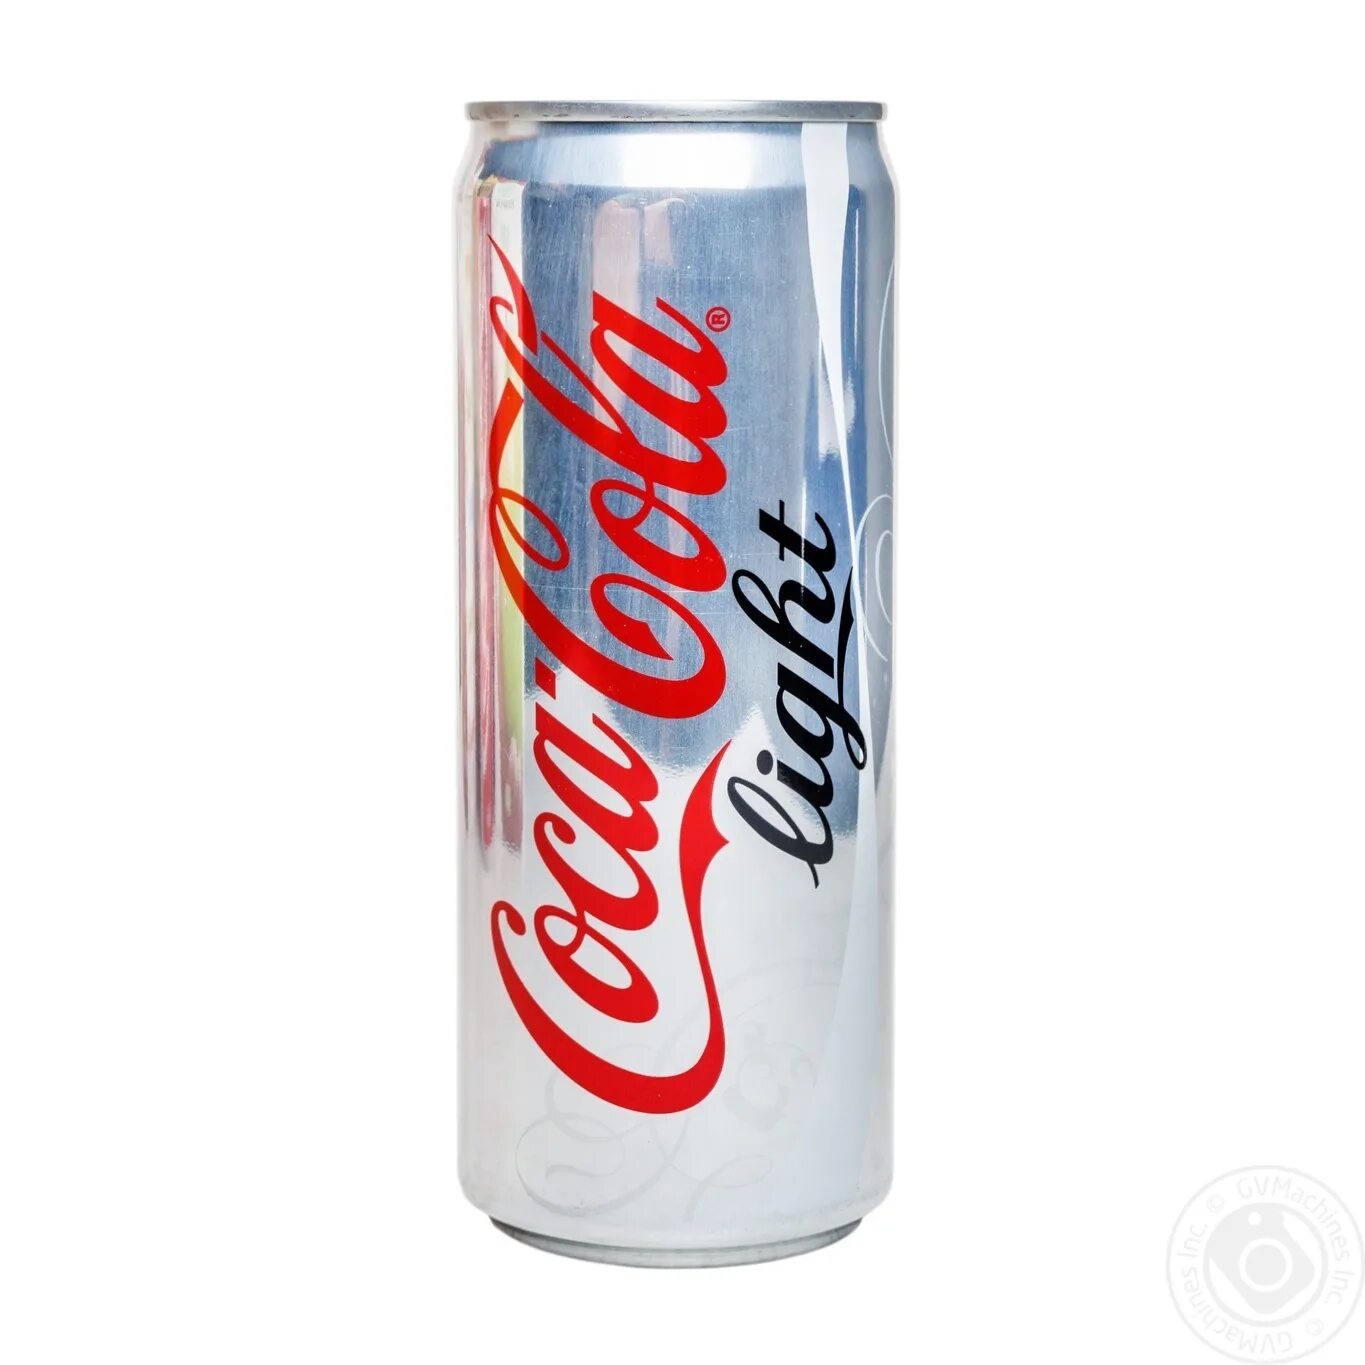 Ж б 0.33. Кока-кола 0.33 ж/б. Напитки 0.33 жб. Кола Лайт 0,33. Кола жб.